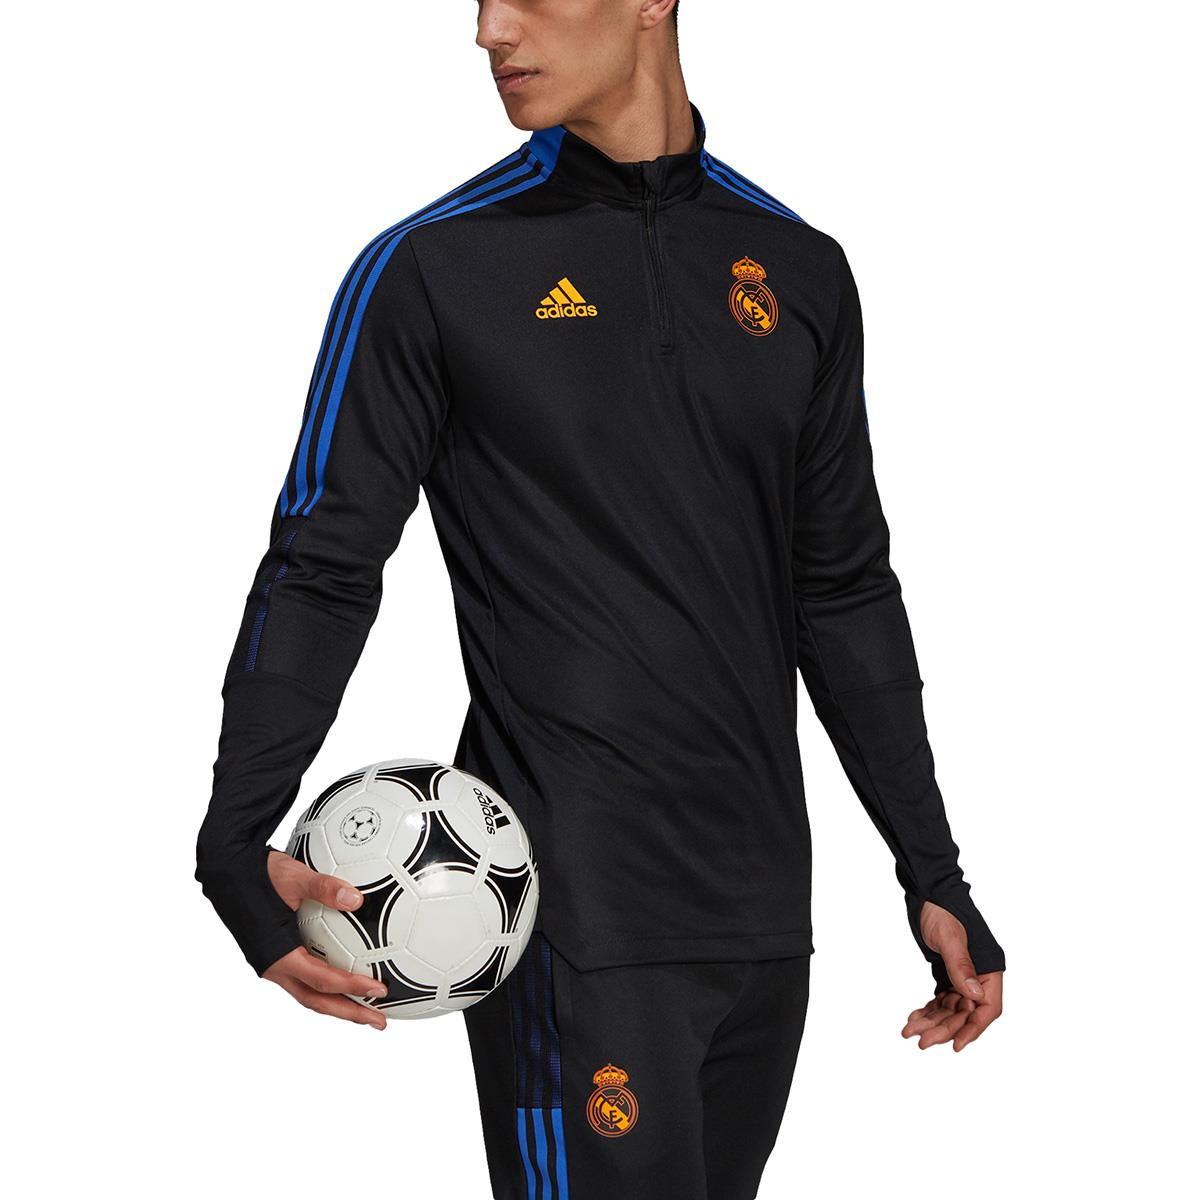 Ballon Real Madrid - Couleur - Taille 5 : : Sports et